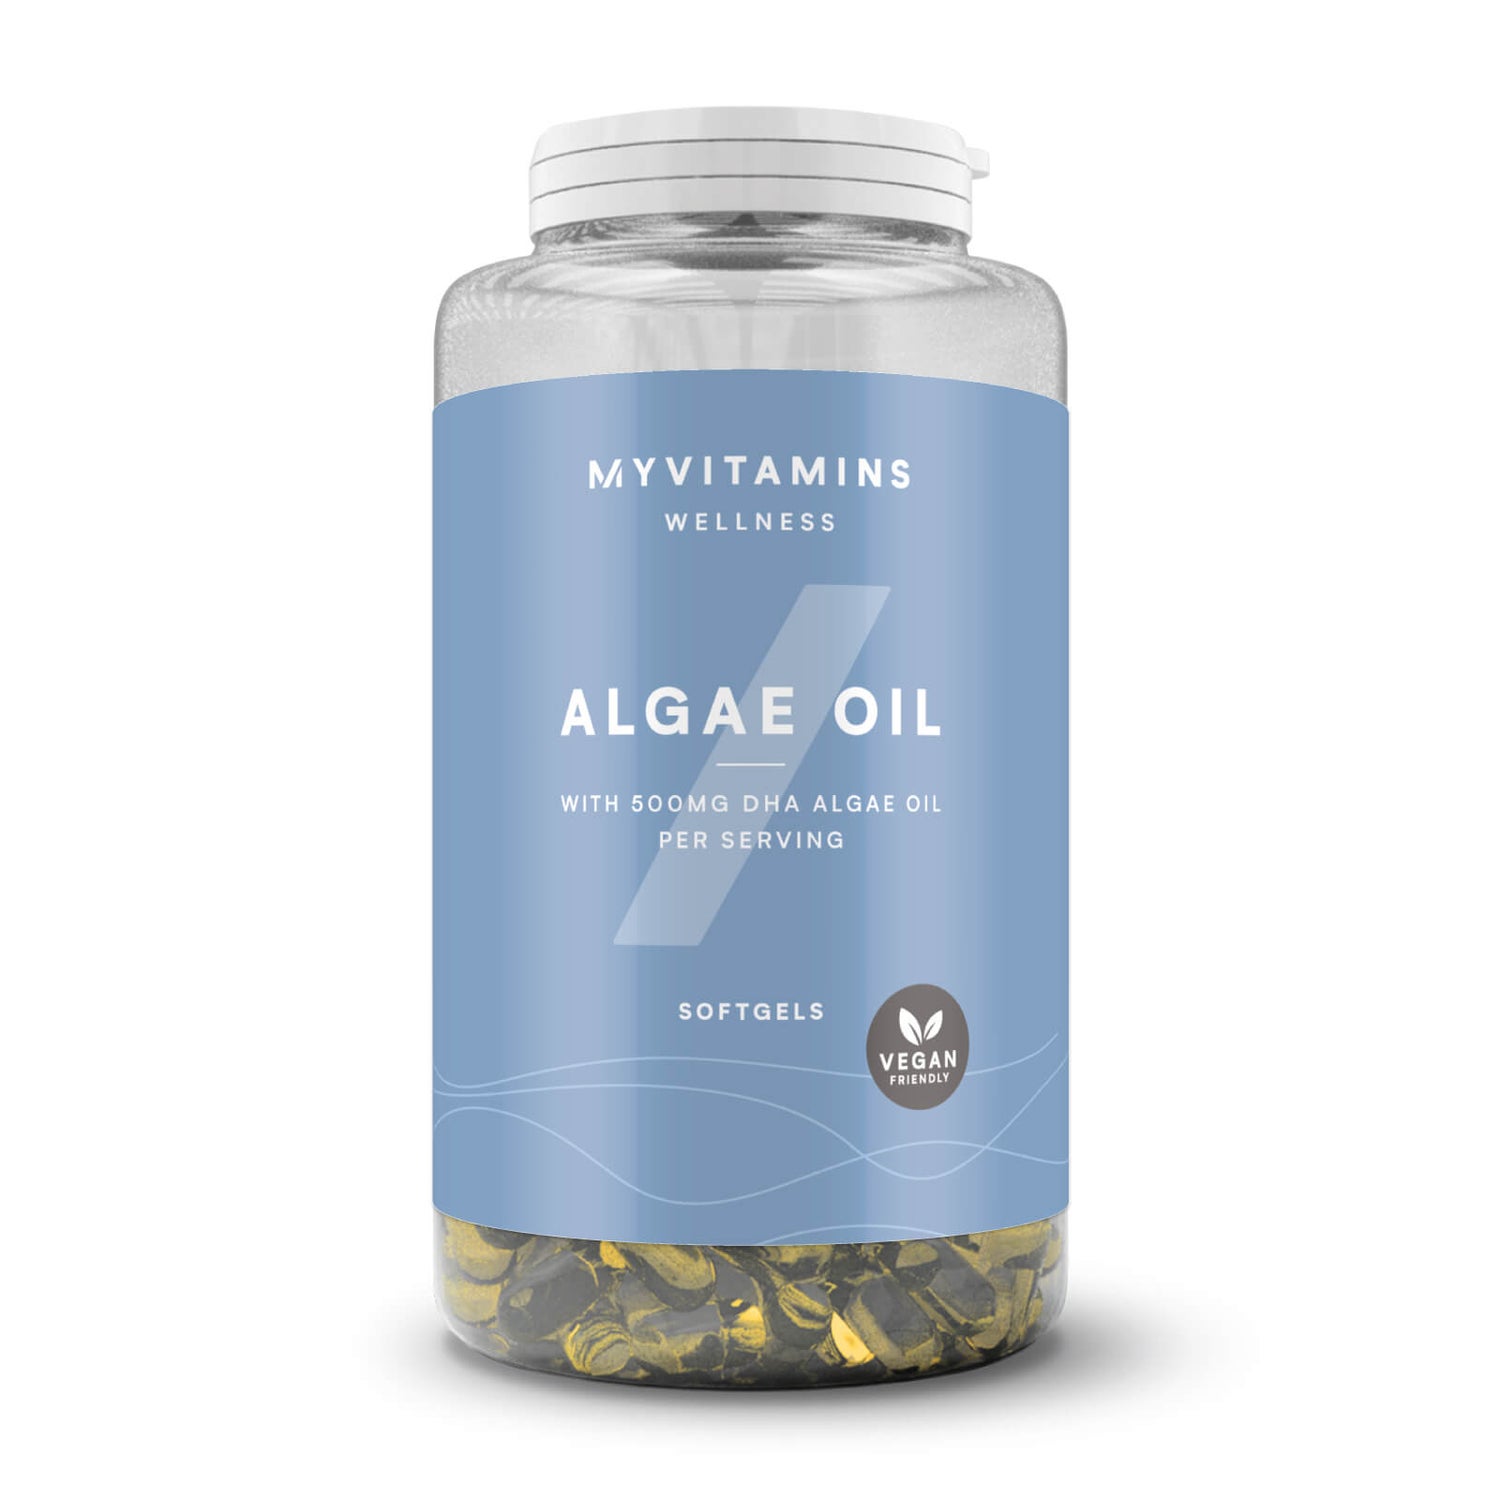 Myvitamins Algae Oil - 30Softgel